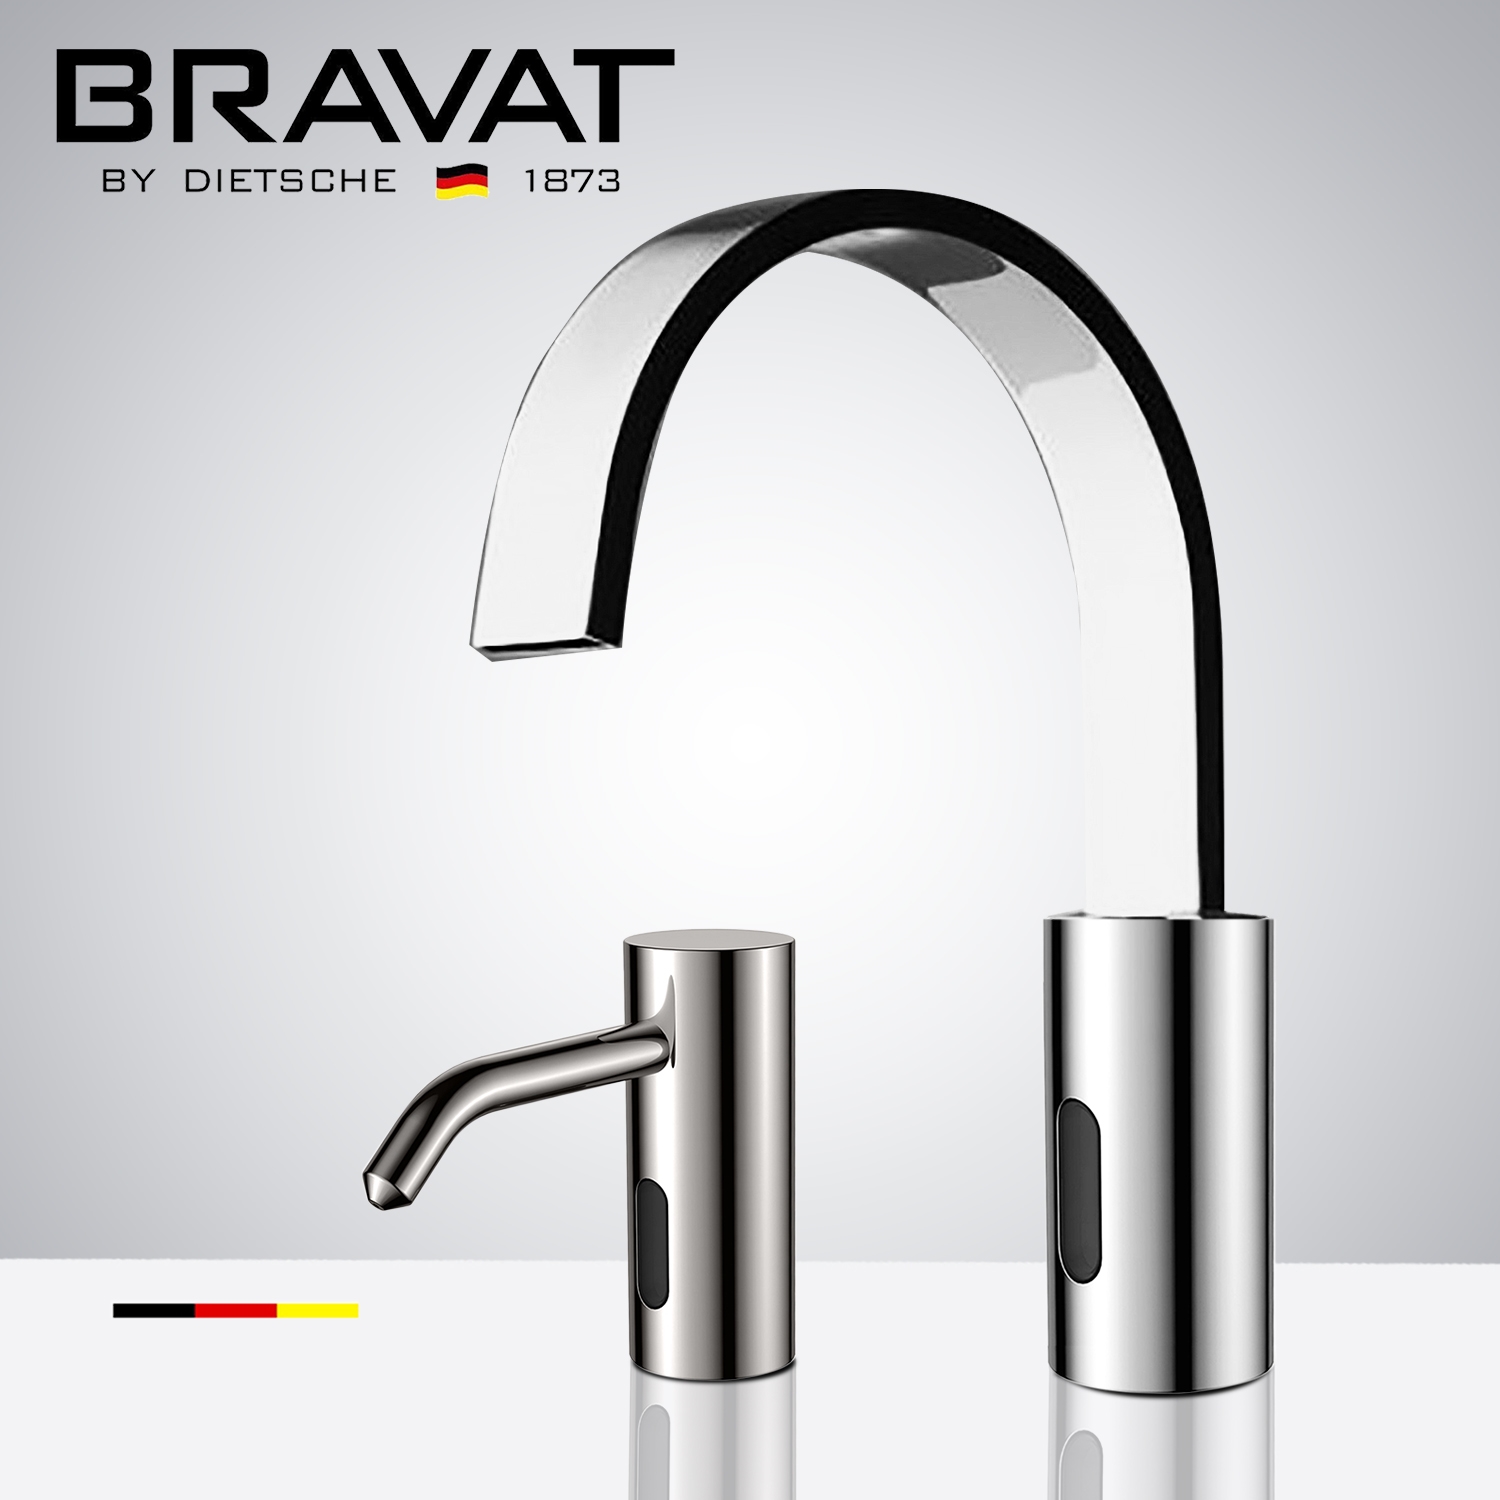 DUPLICATE Fontana Bravat Freestanding Automatic Commercial Sensor Faucet & Automatic Soap Dispenser in Chrome